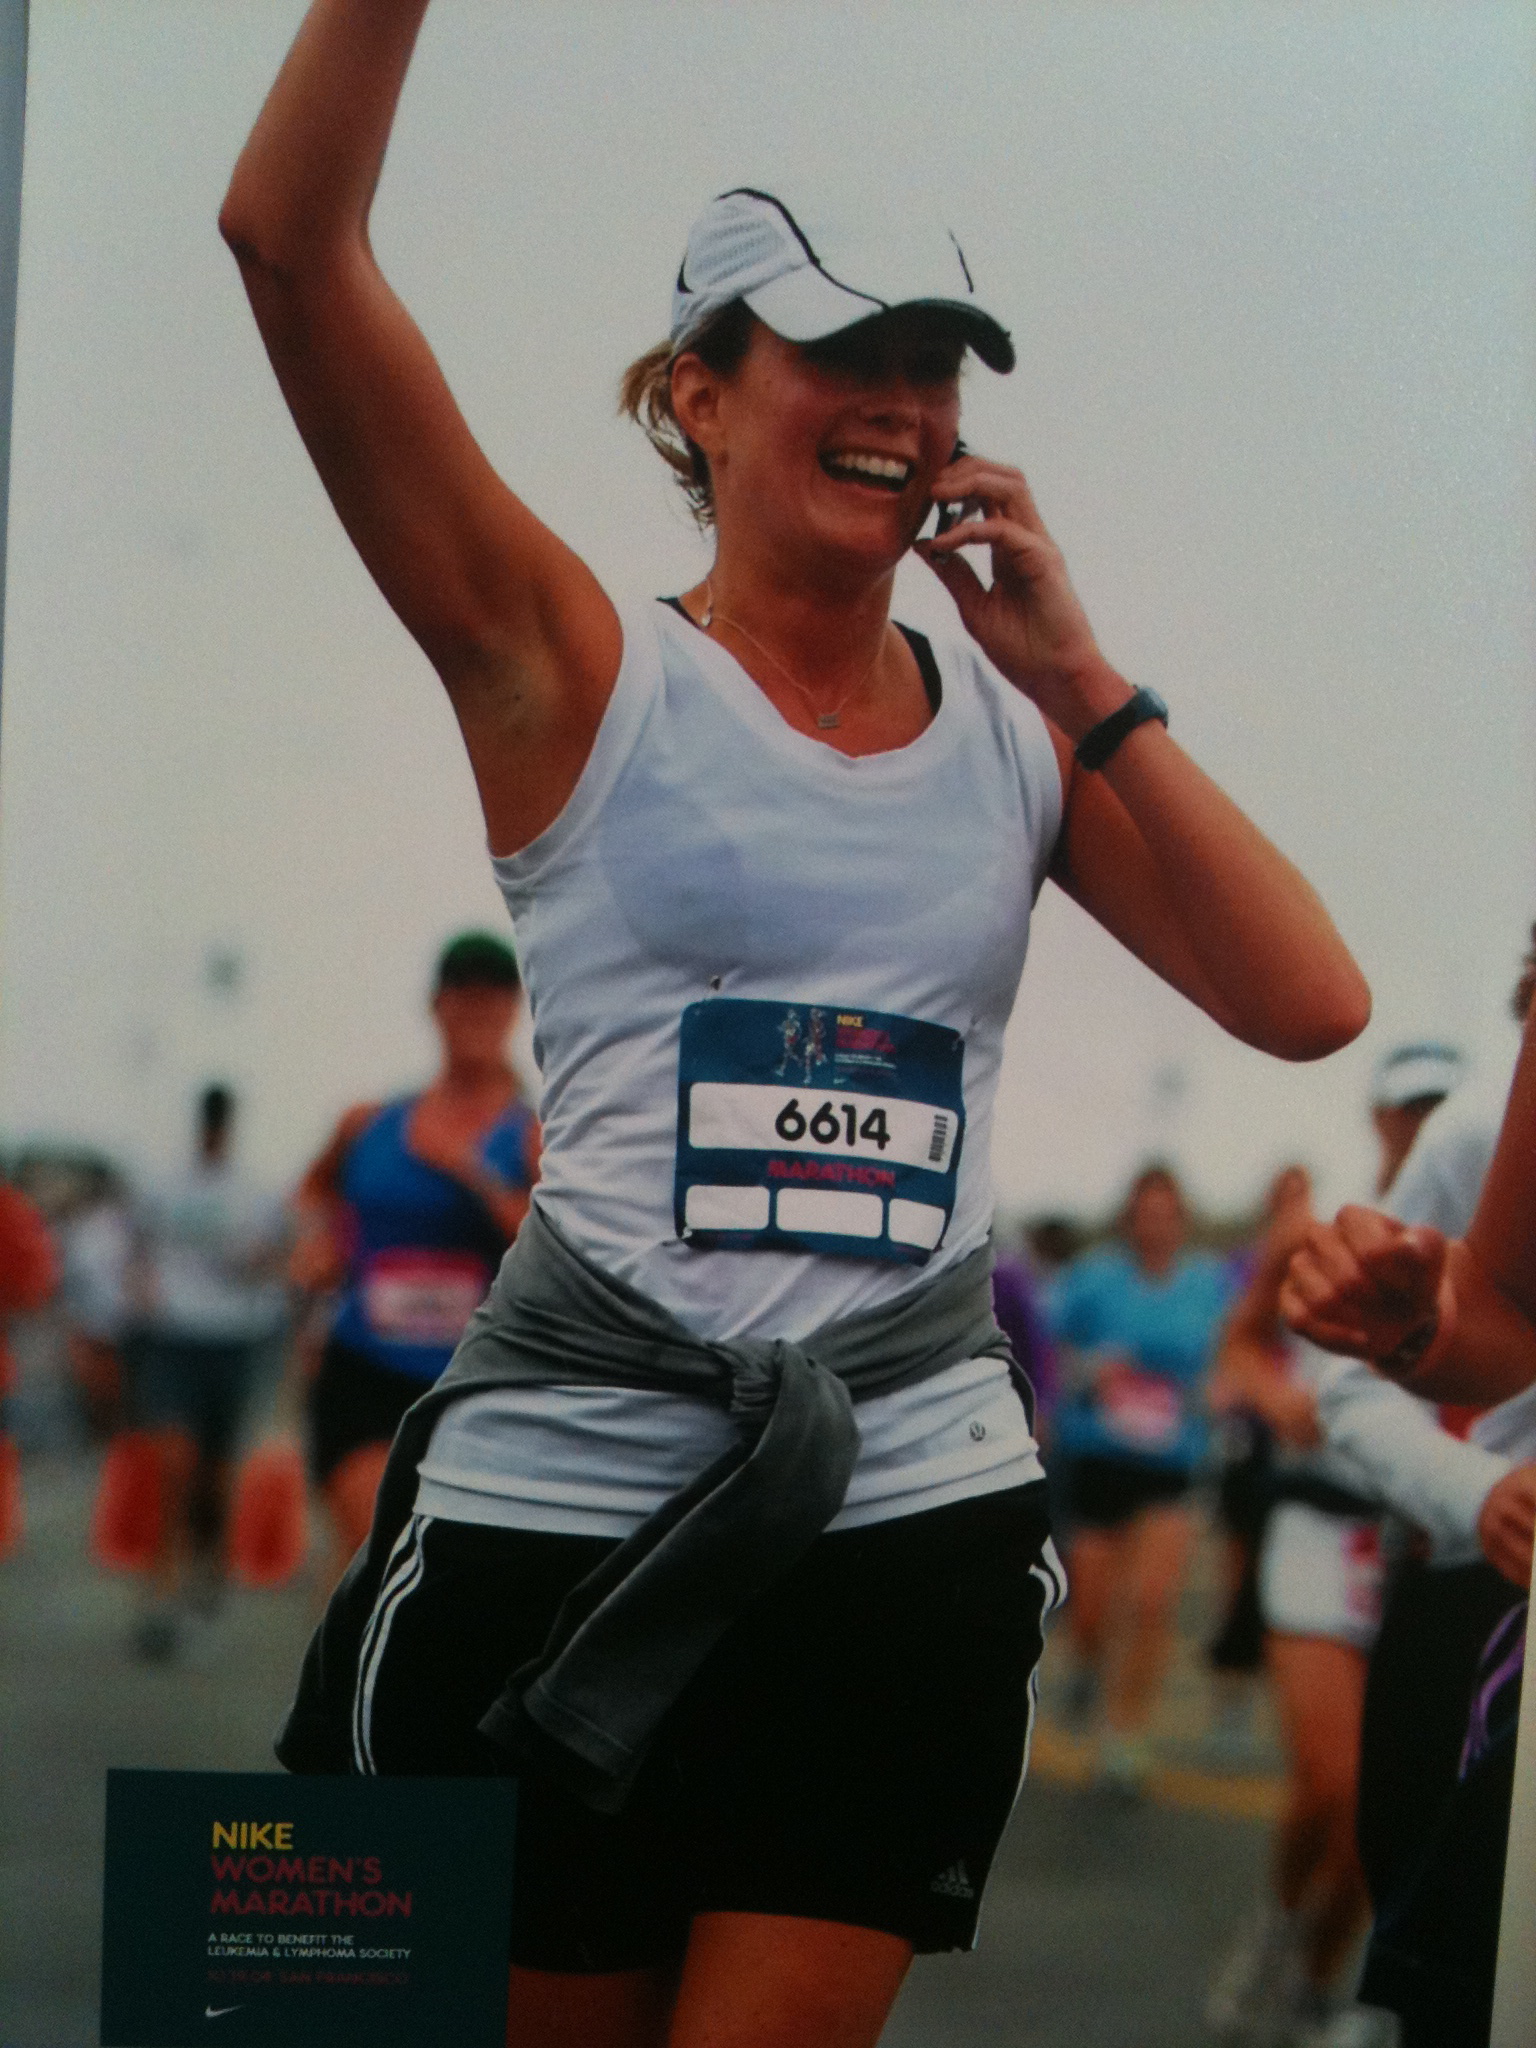 (200) Nike Women's Half Oct 2008 (finish line call w/absent run partner)